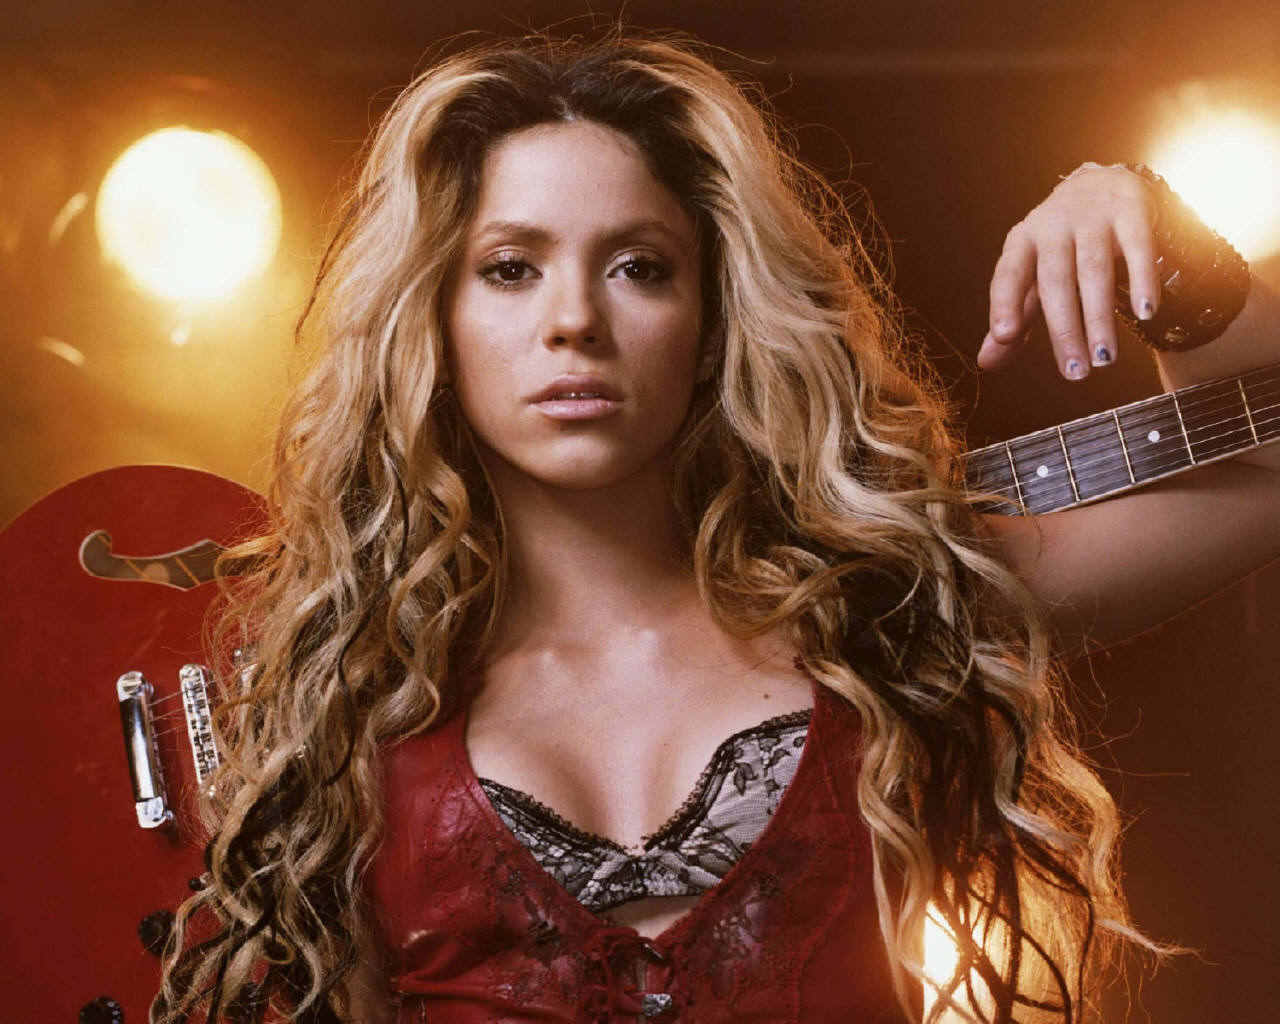 Shakira and Pitbull ‘Get It Started’ mention Manila on Lyrics Listen to MP3